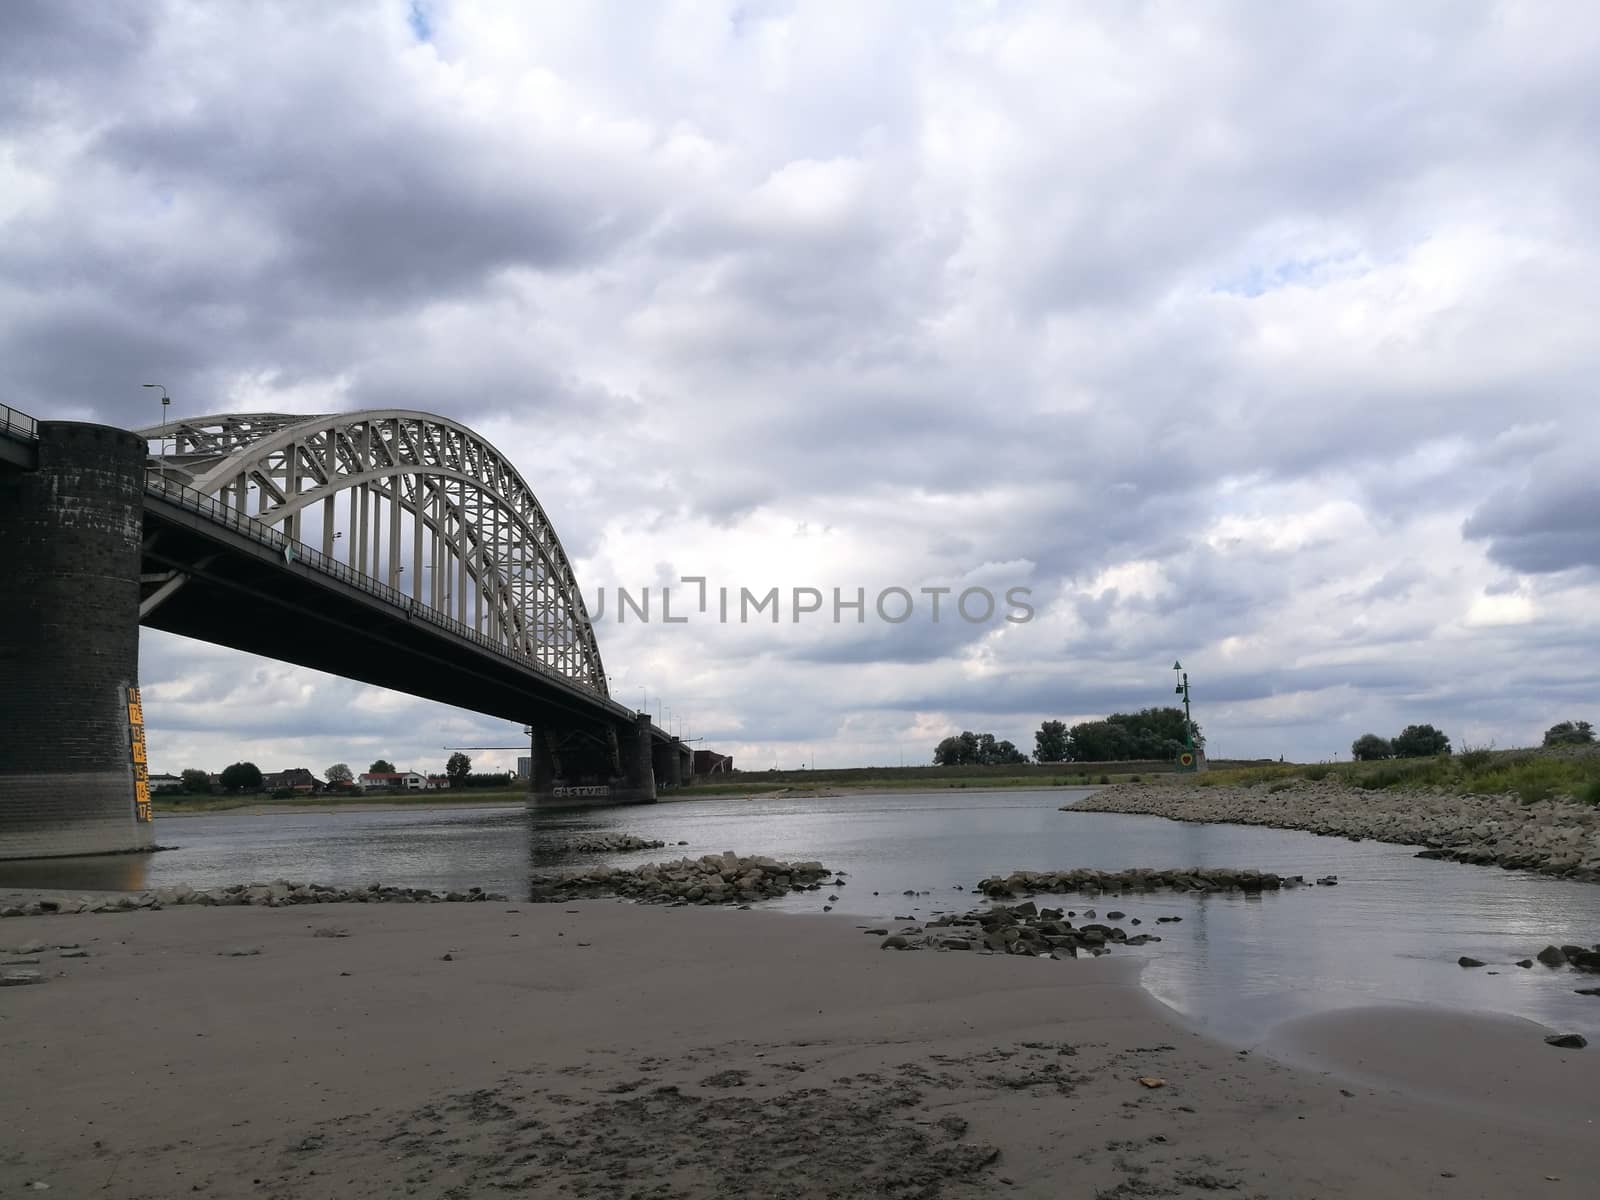 Main bridge over the channel in Nijmegen, Netherlans under a dramatic sky